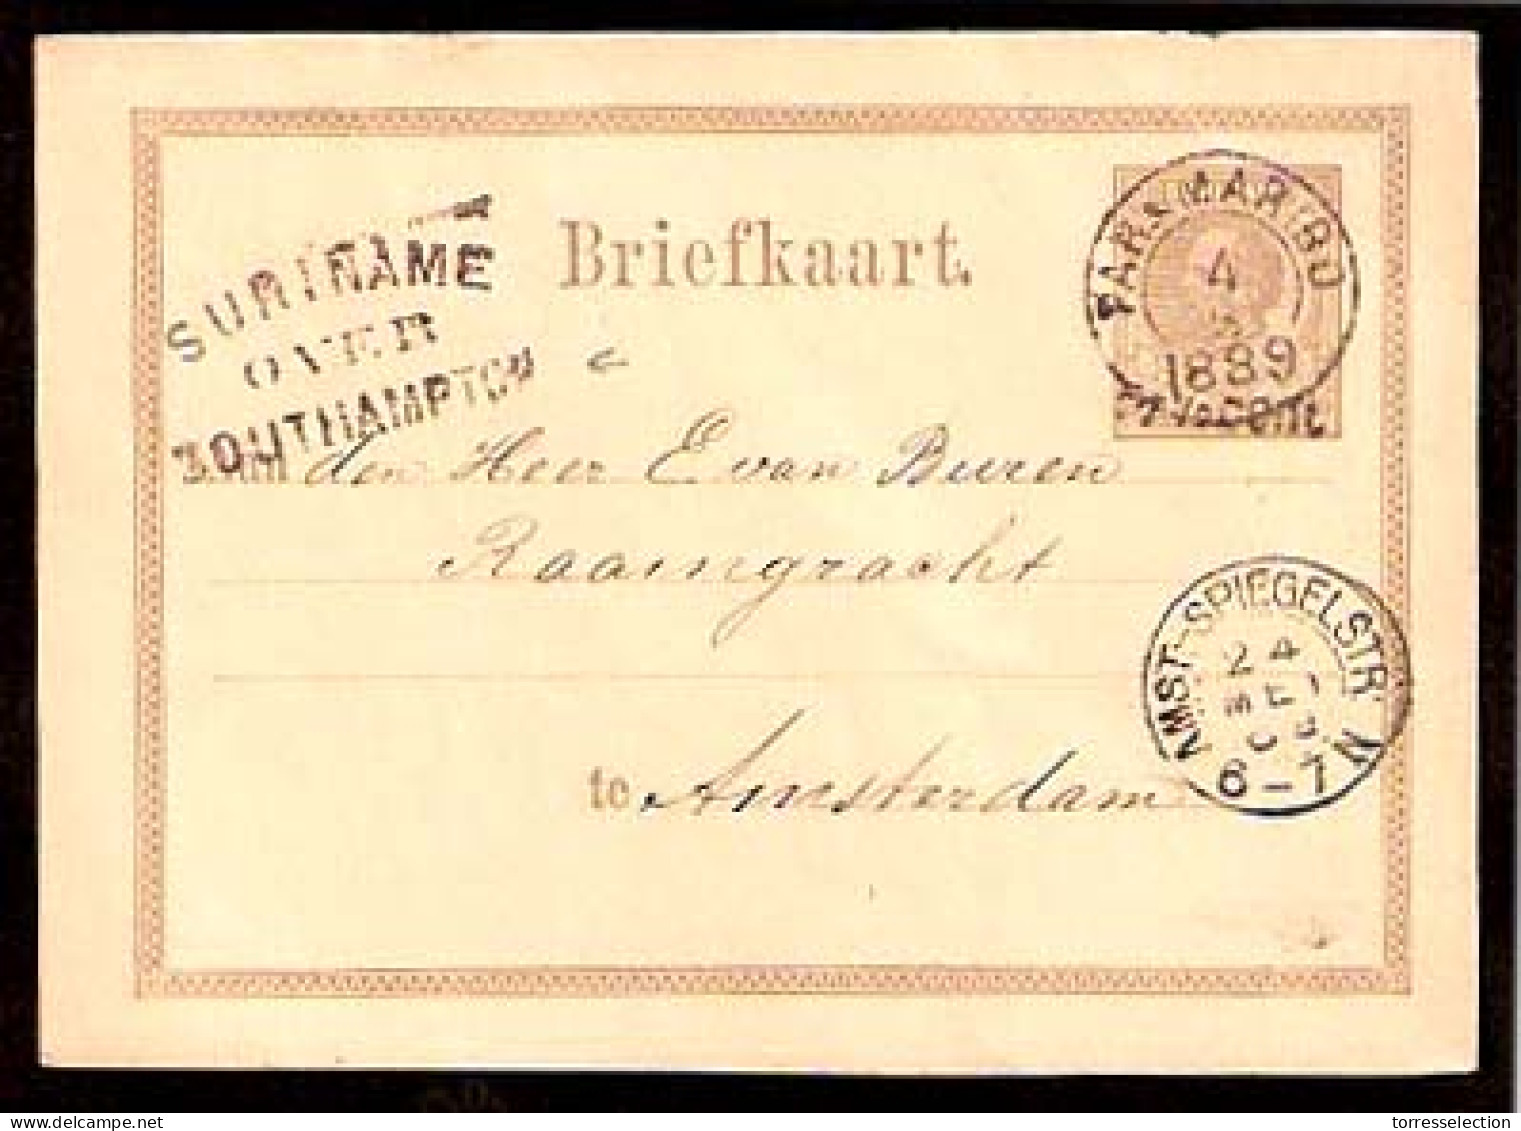 SURINAME. 1889. Paranibo - Amsterdam. 7 1/2c Ovpt / 15c Stat Card / Cds / Suriname / Over / SOUTHAMPTON (xxx) Mark. VF. - Suriname